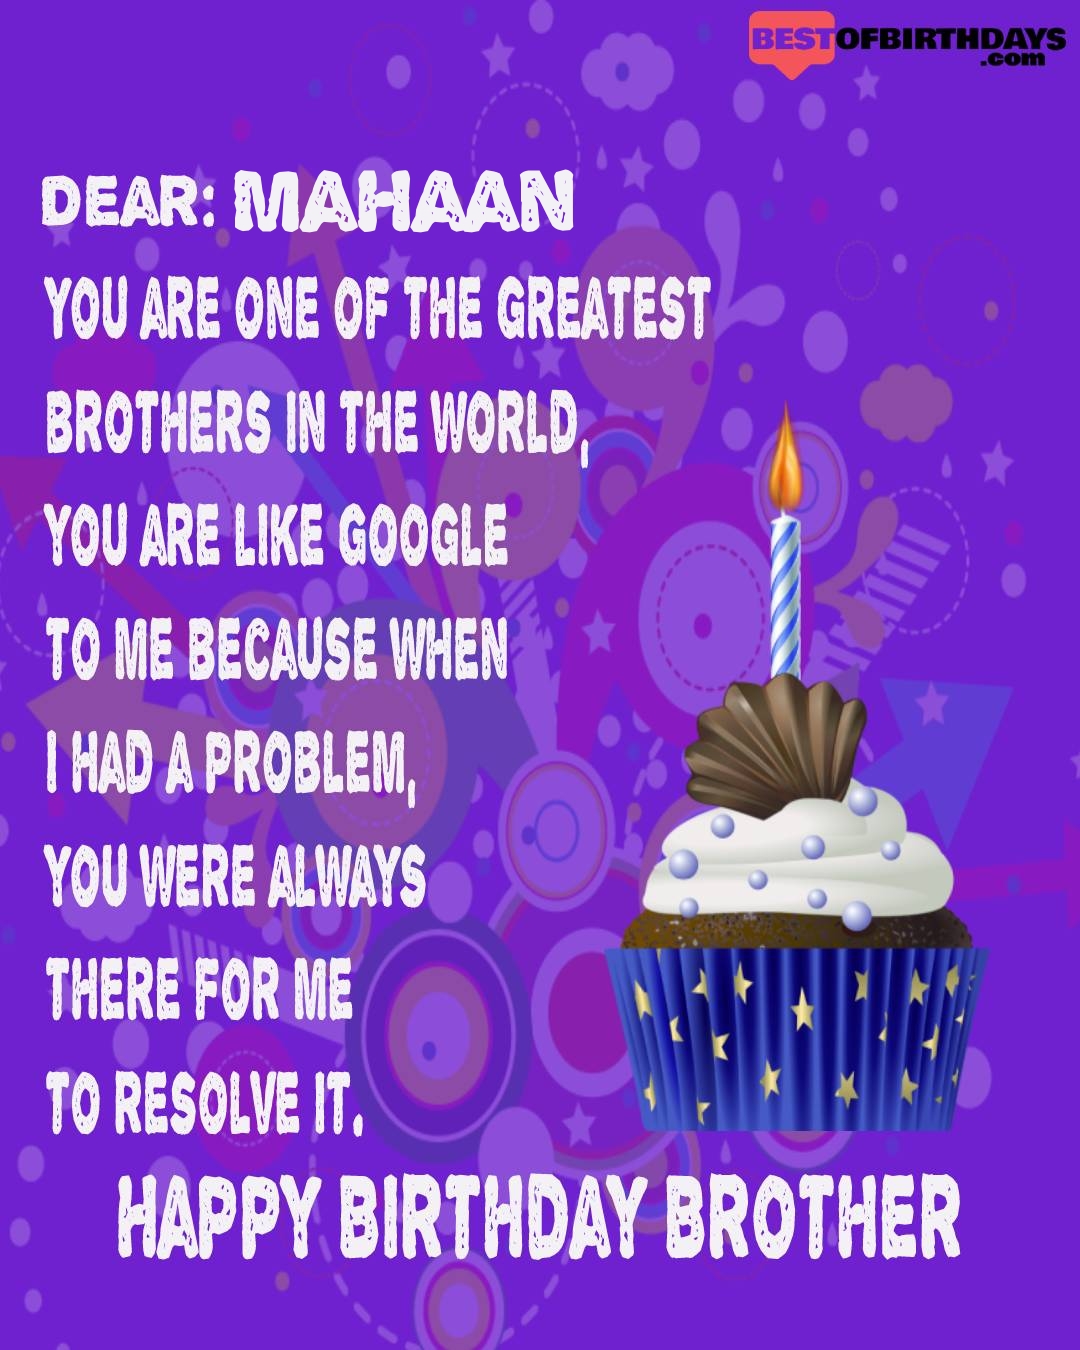 Happy birthday mahaan bhai brother bro